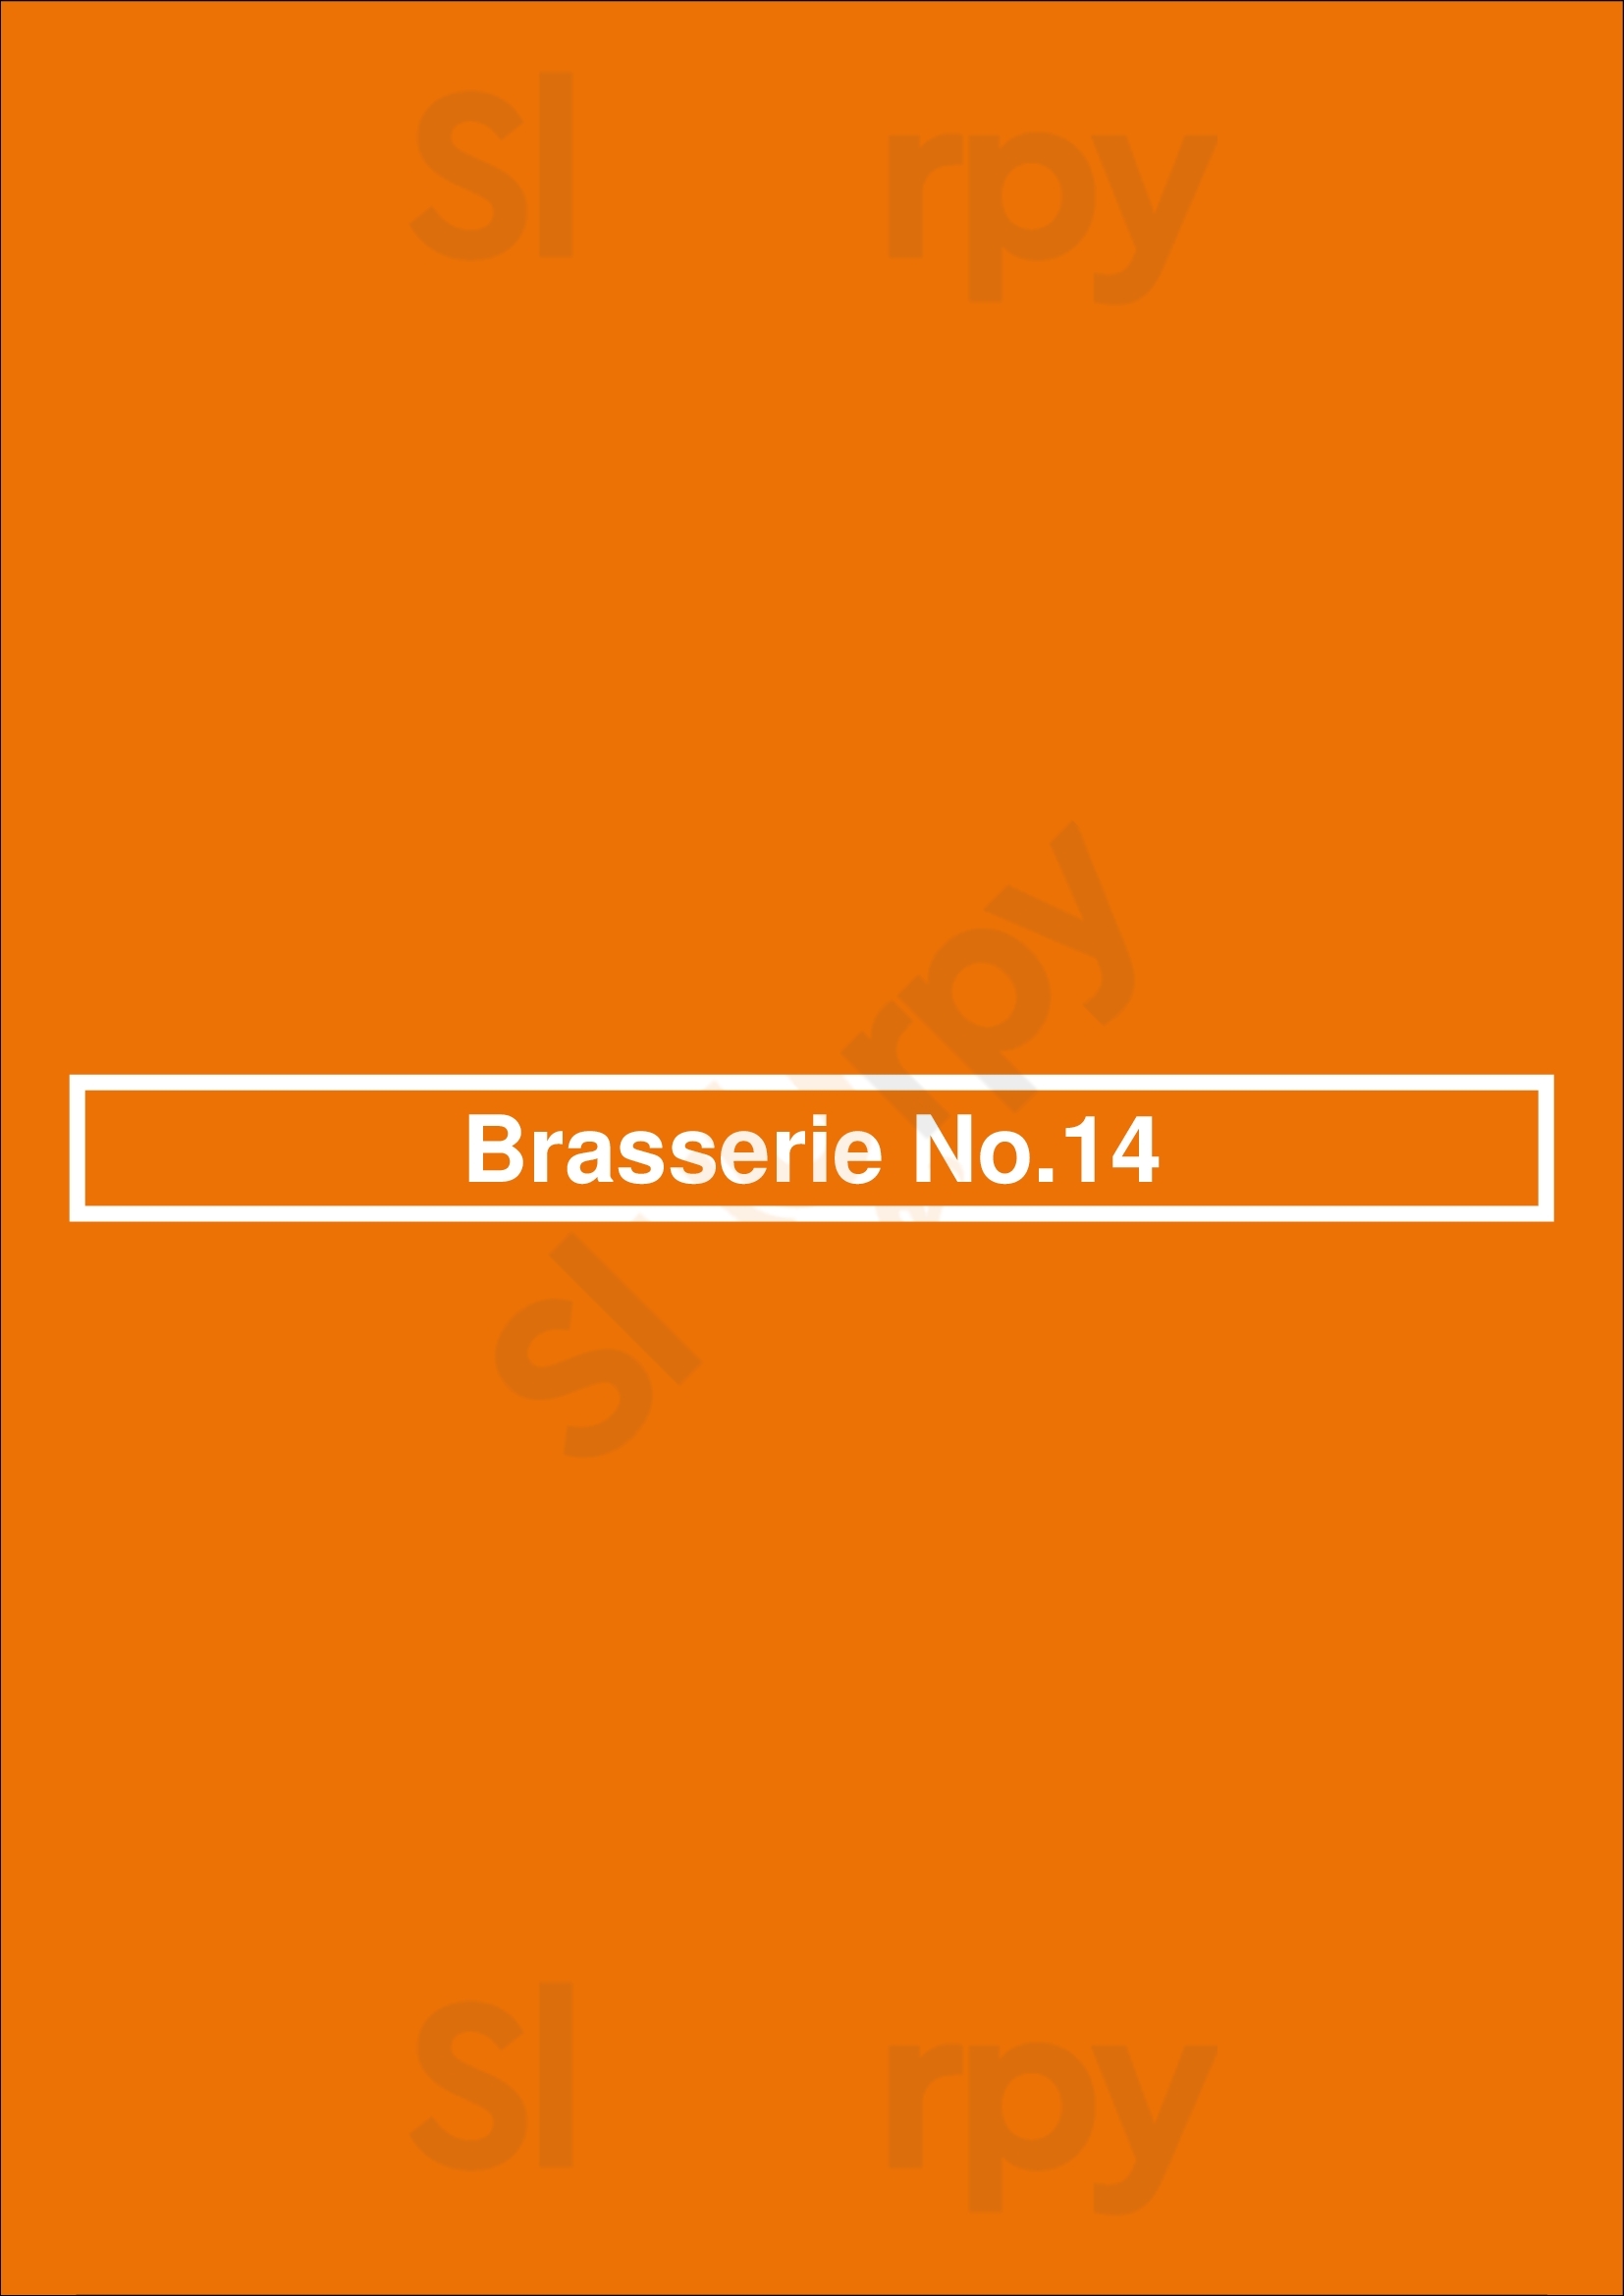 Brasserie No.14 Lemmer Menu - 1